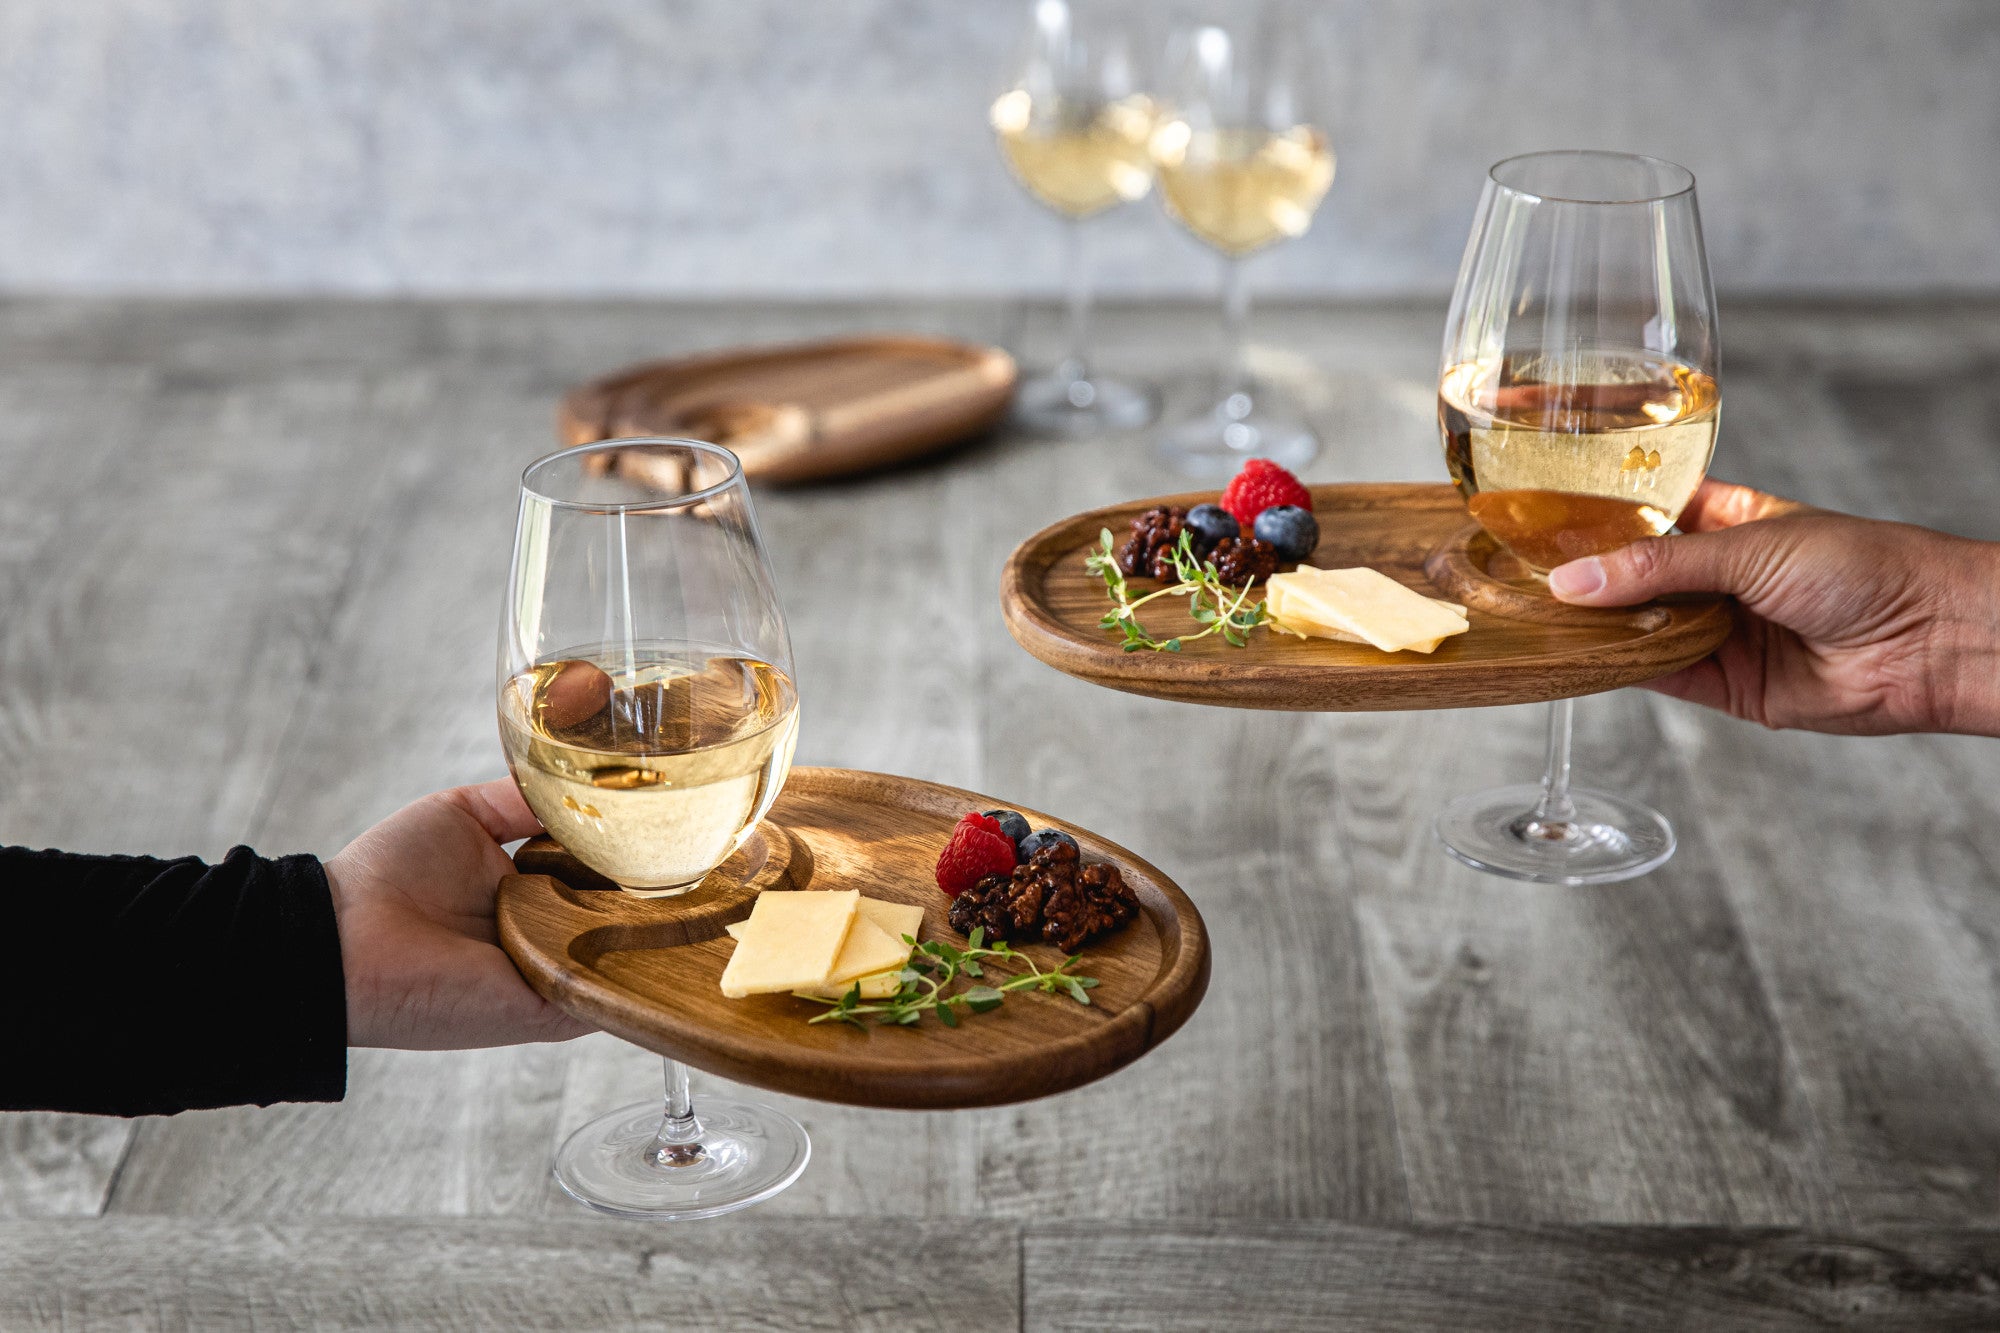 Minnesota Vikings - Wine Appetizer Plate Set Of 4